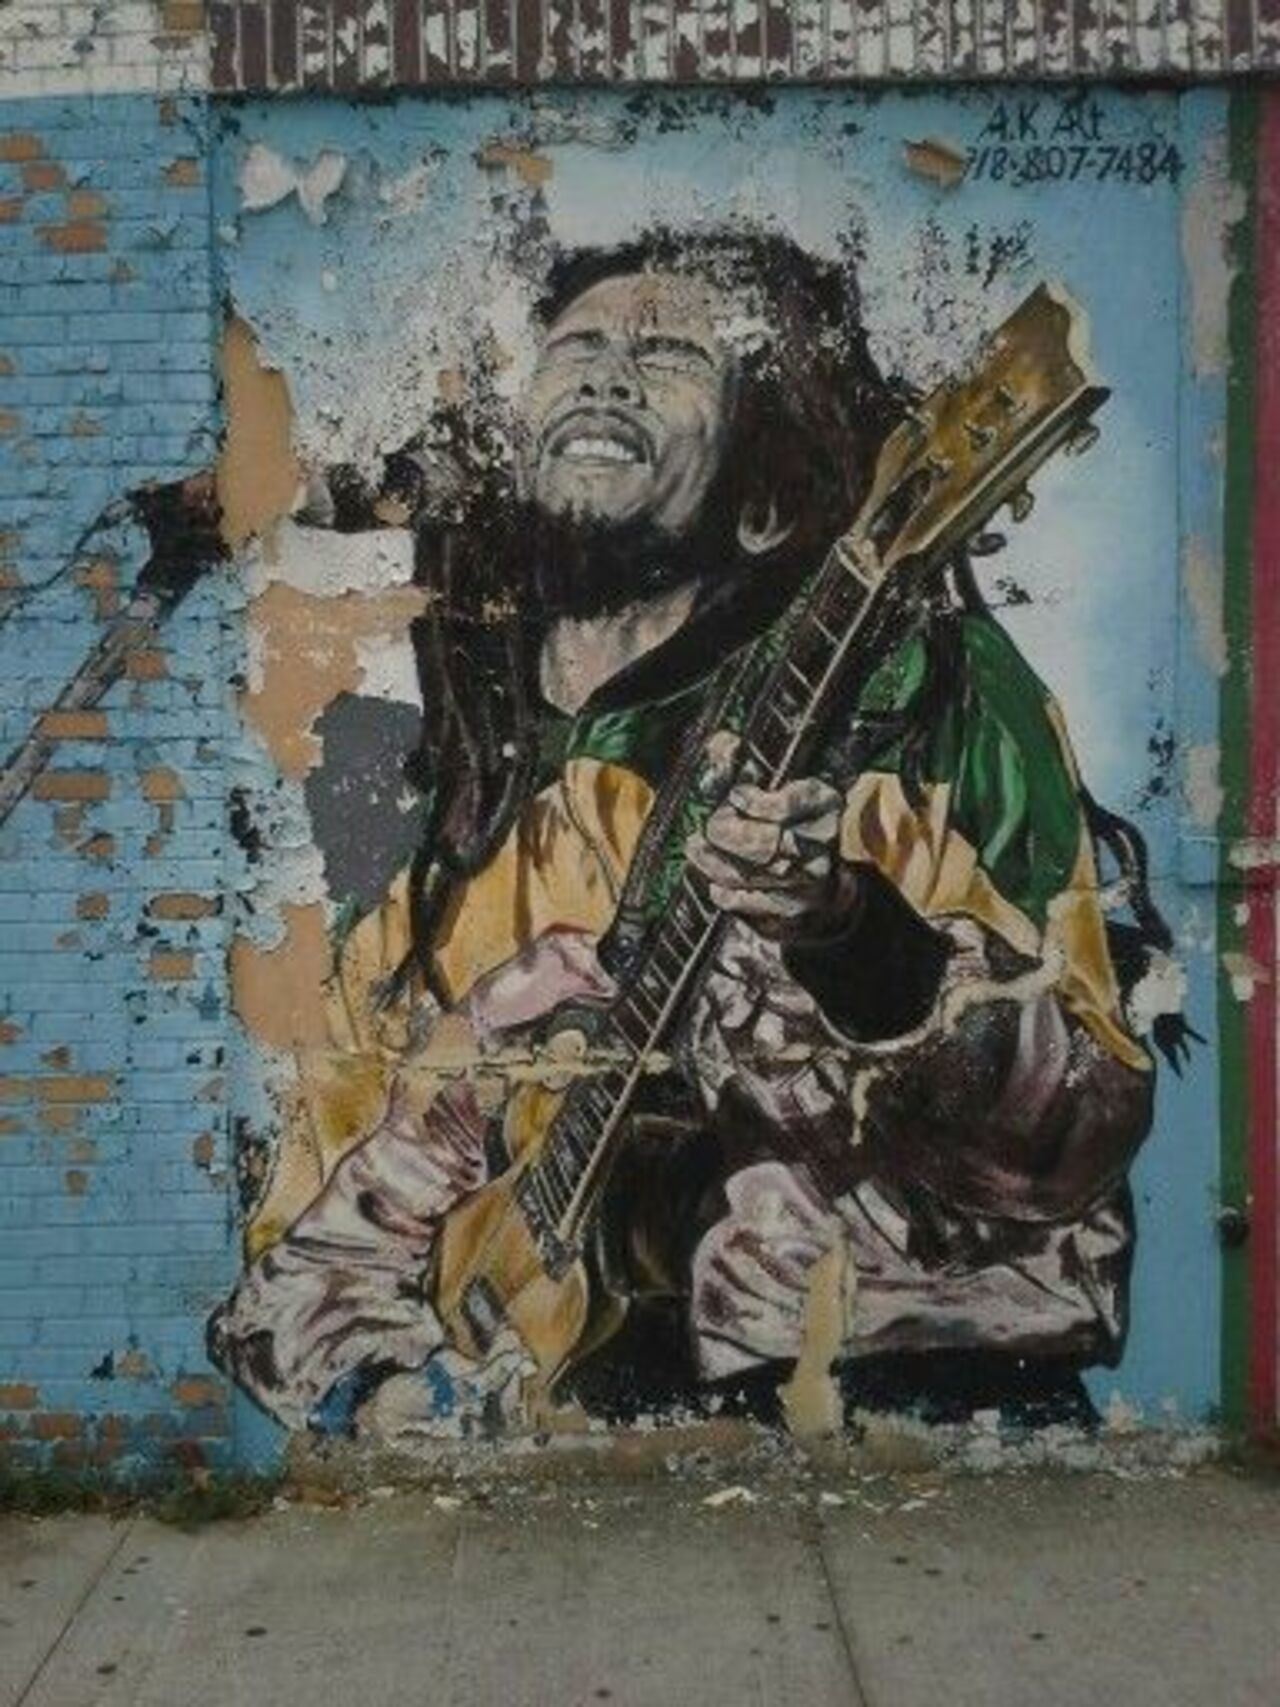 “@5putnik1: One Love  • #bobmarley #streetart #graffiti #art #funky #dope . : http://t.co/N1nRhHiu9O”